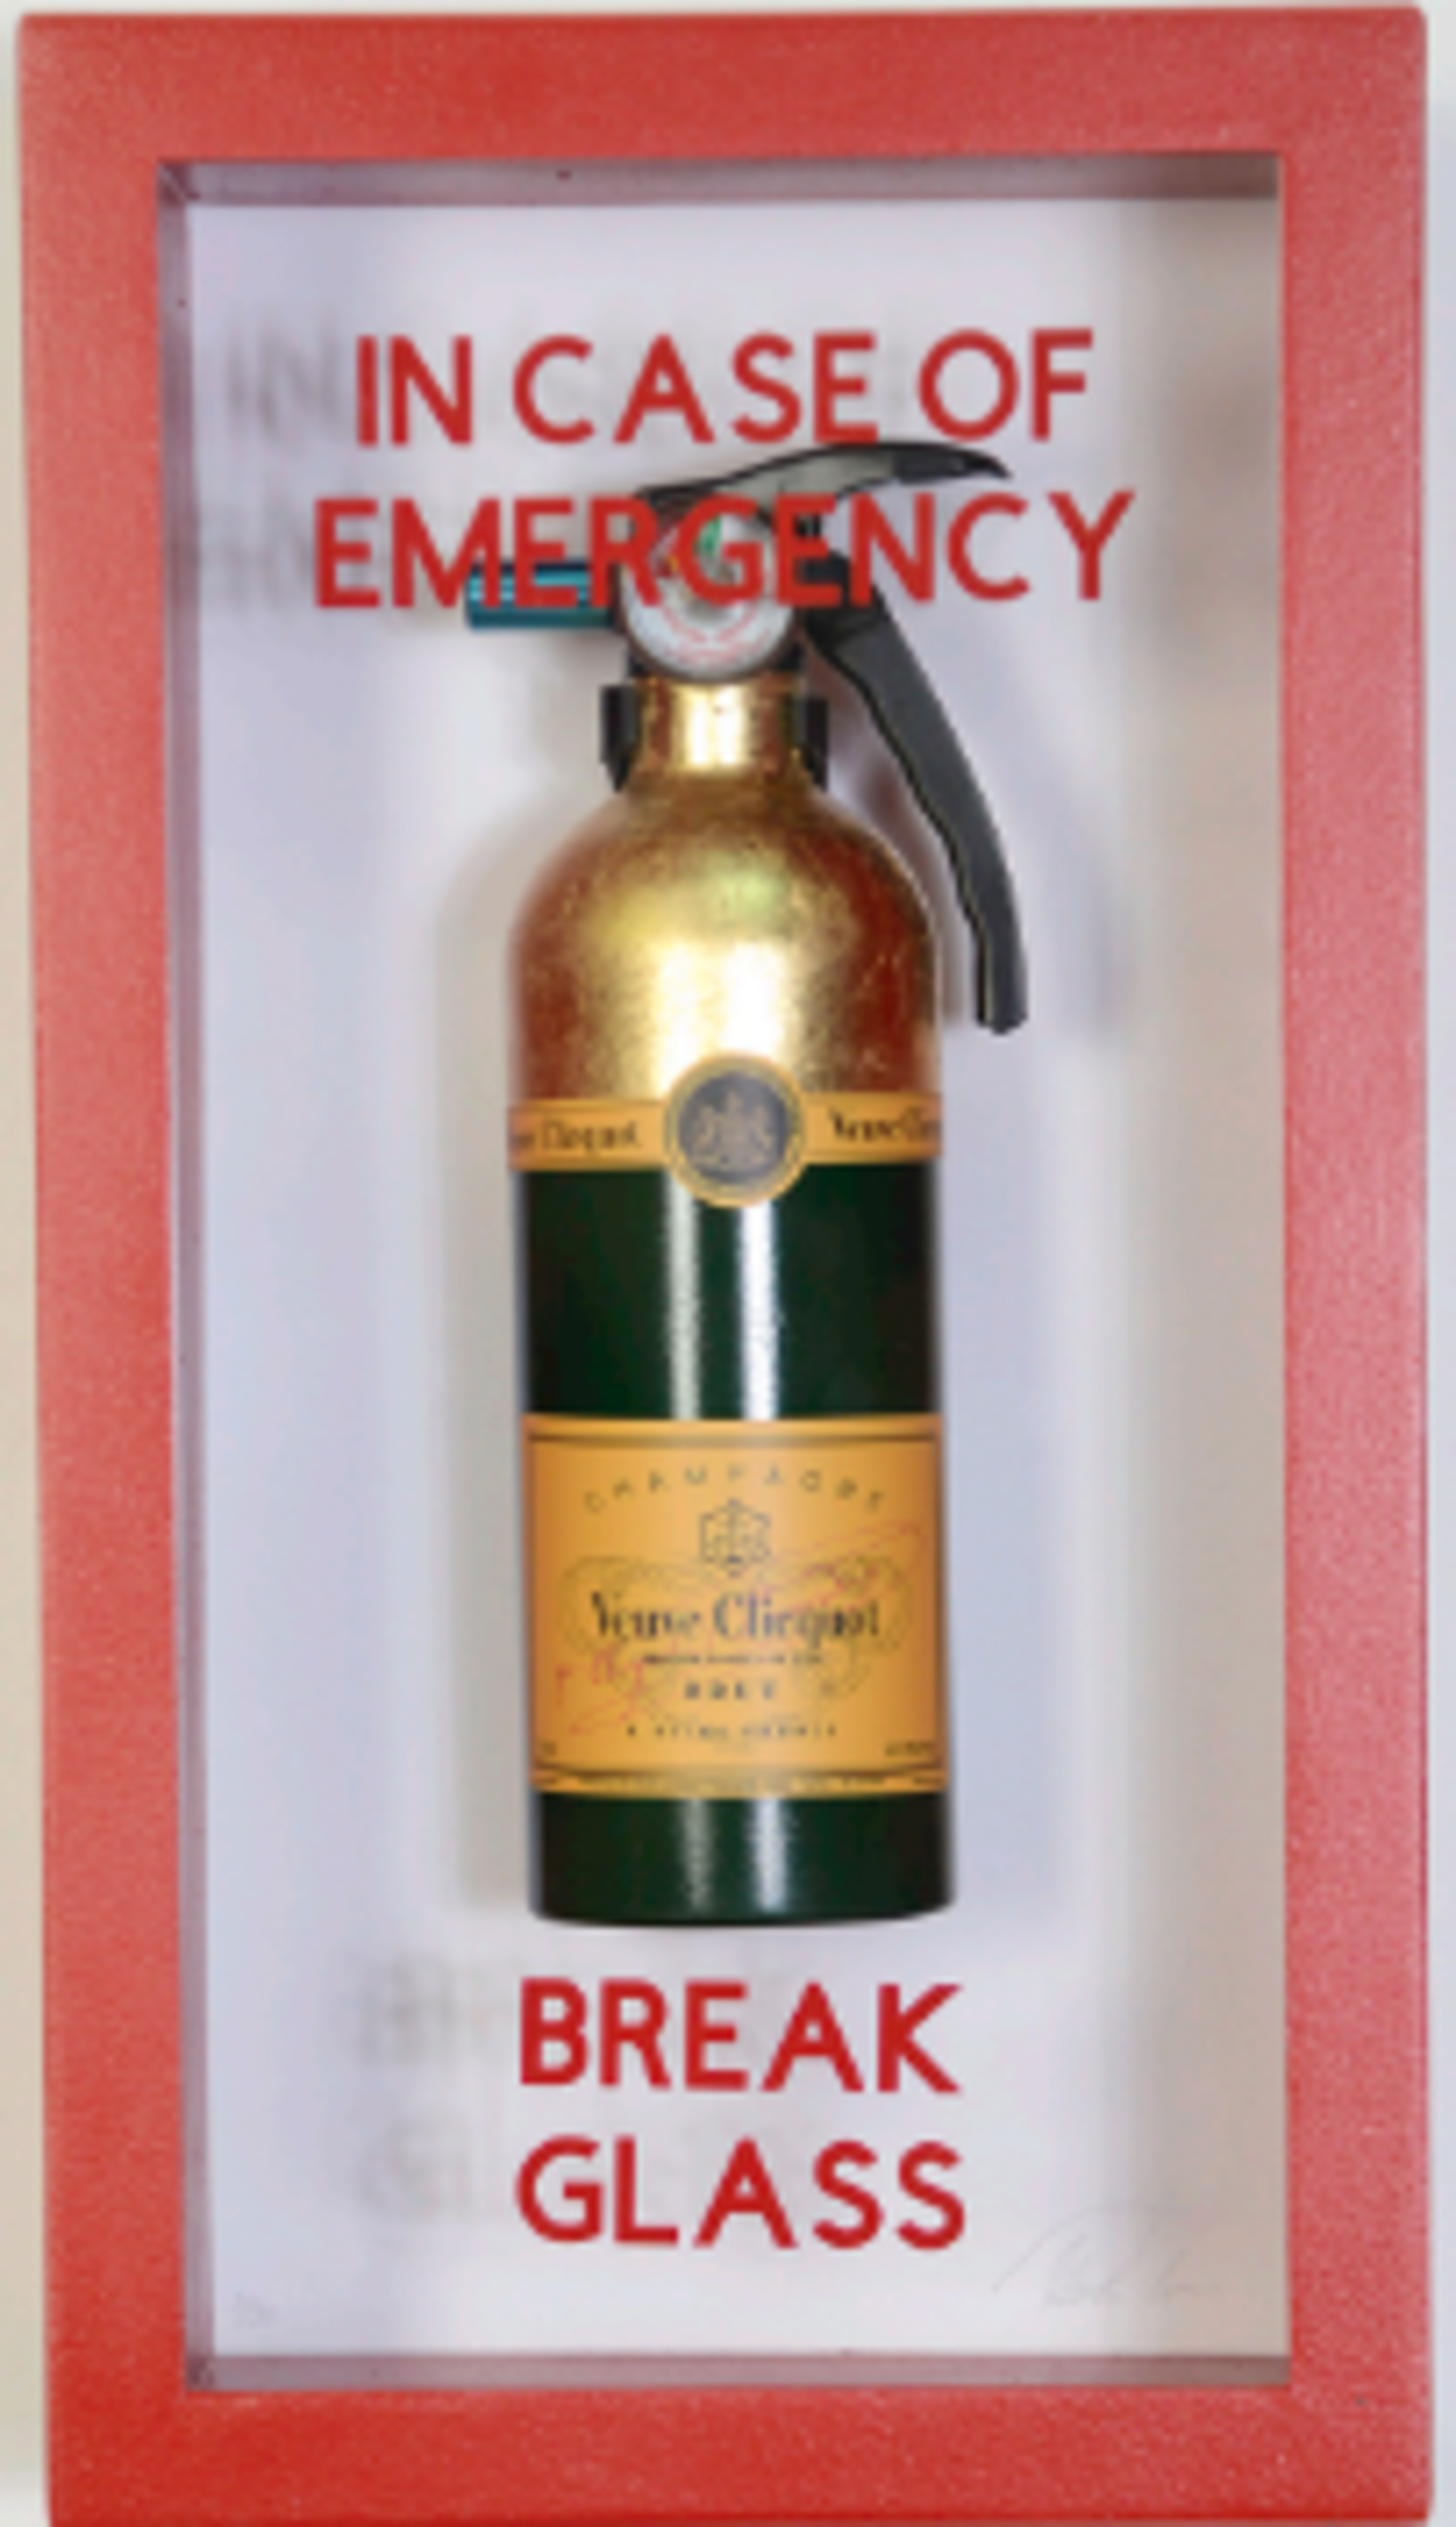 In Case of Emergency, Break Glass (Veuve Clicquot) by Plastic Jesus